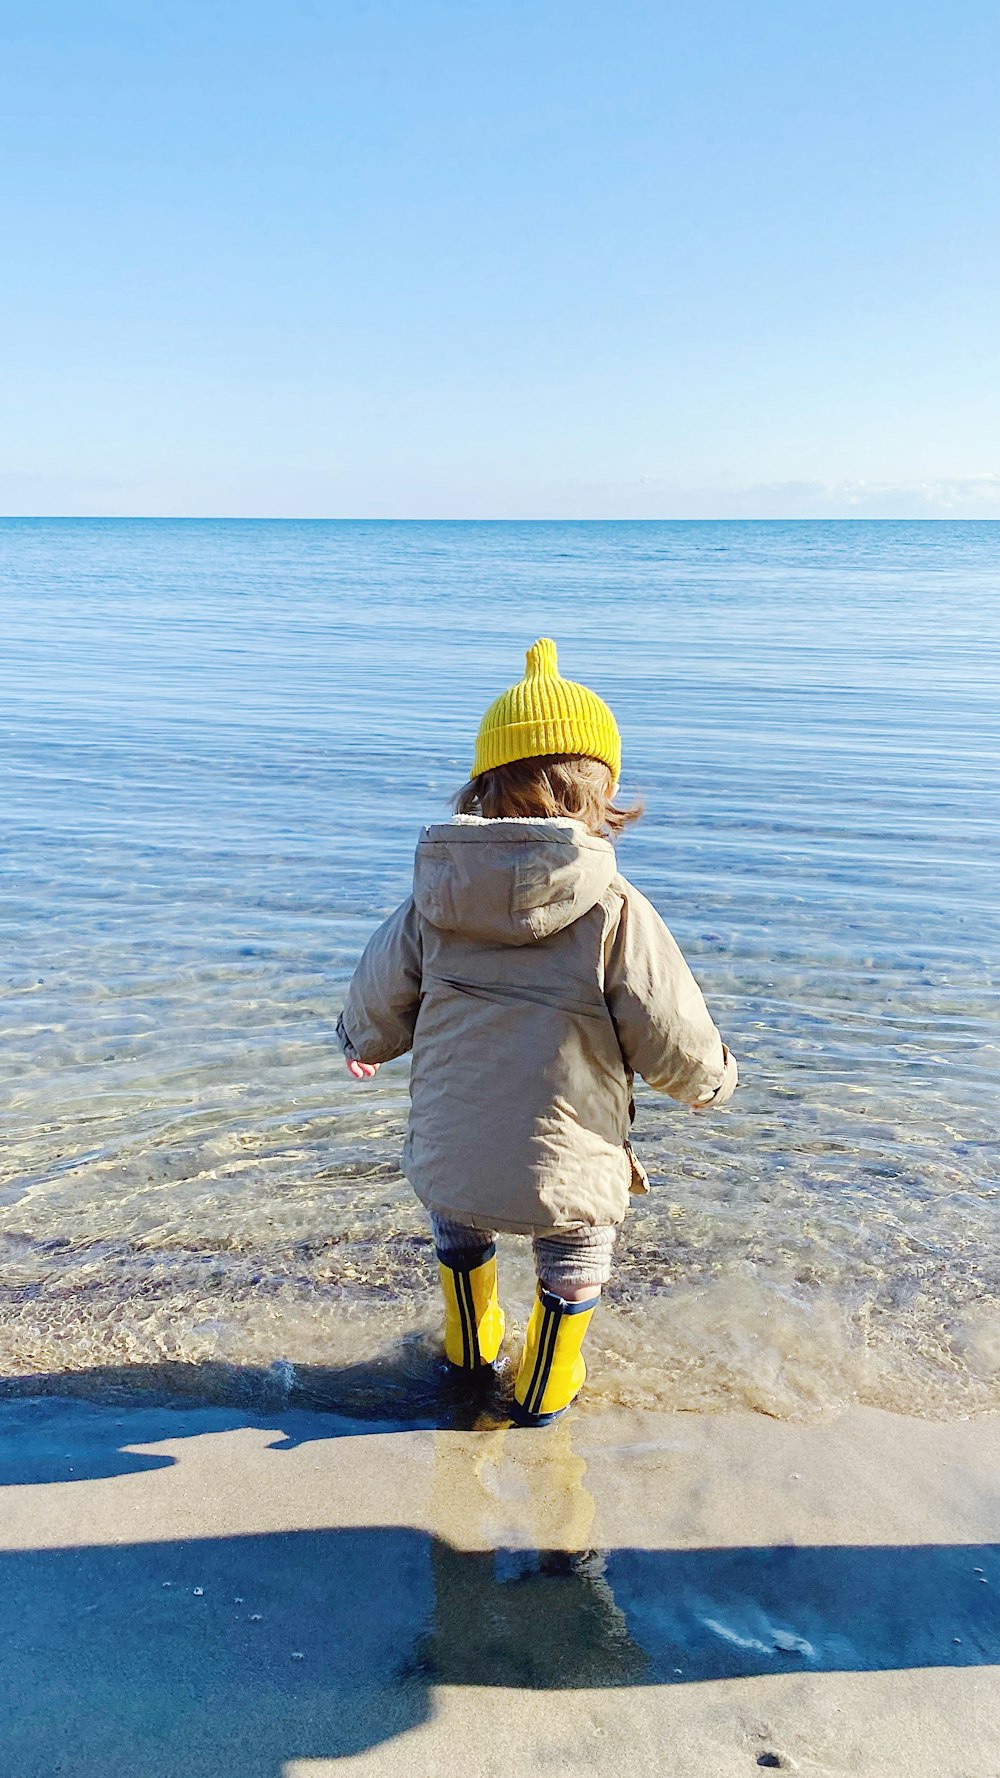 a child walking on a beach